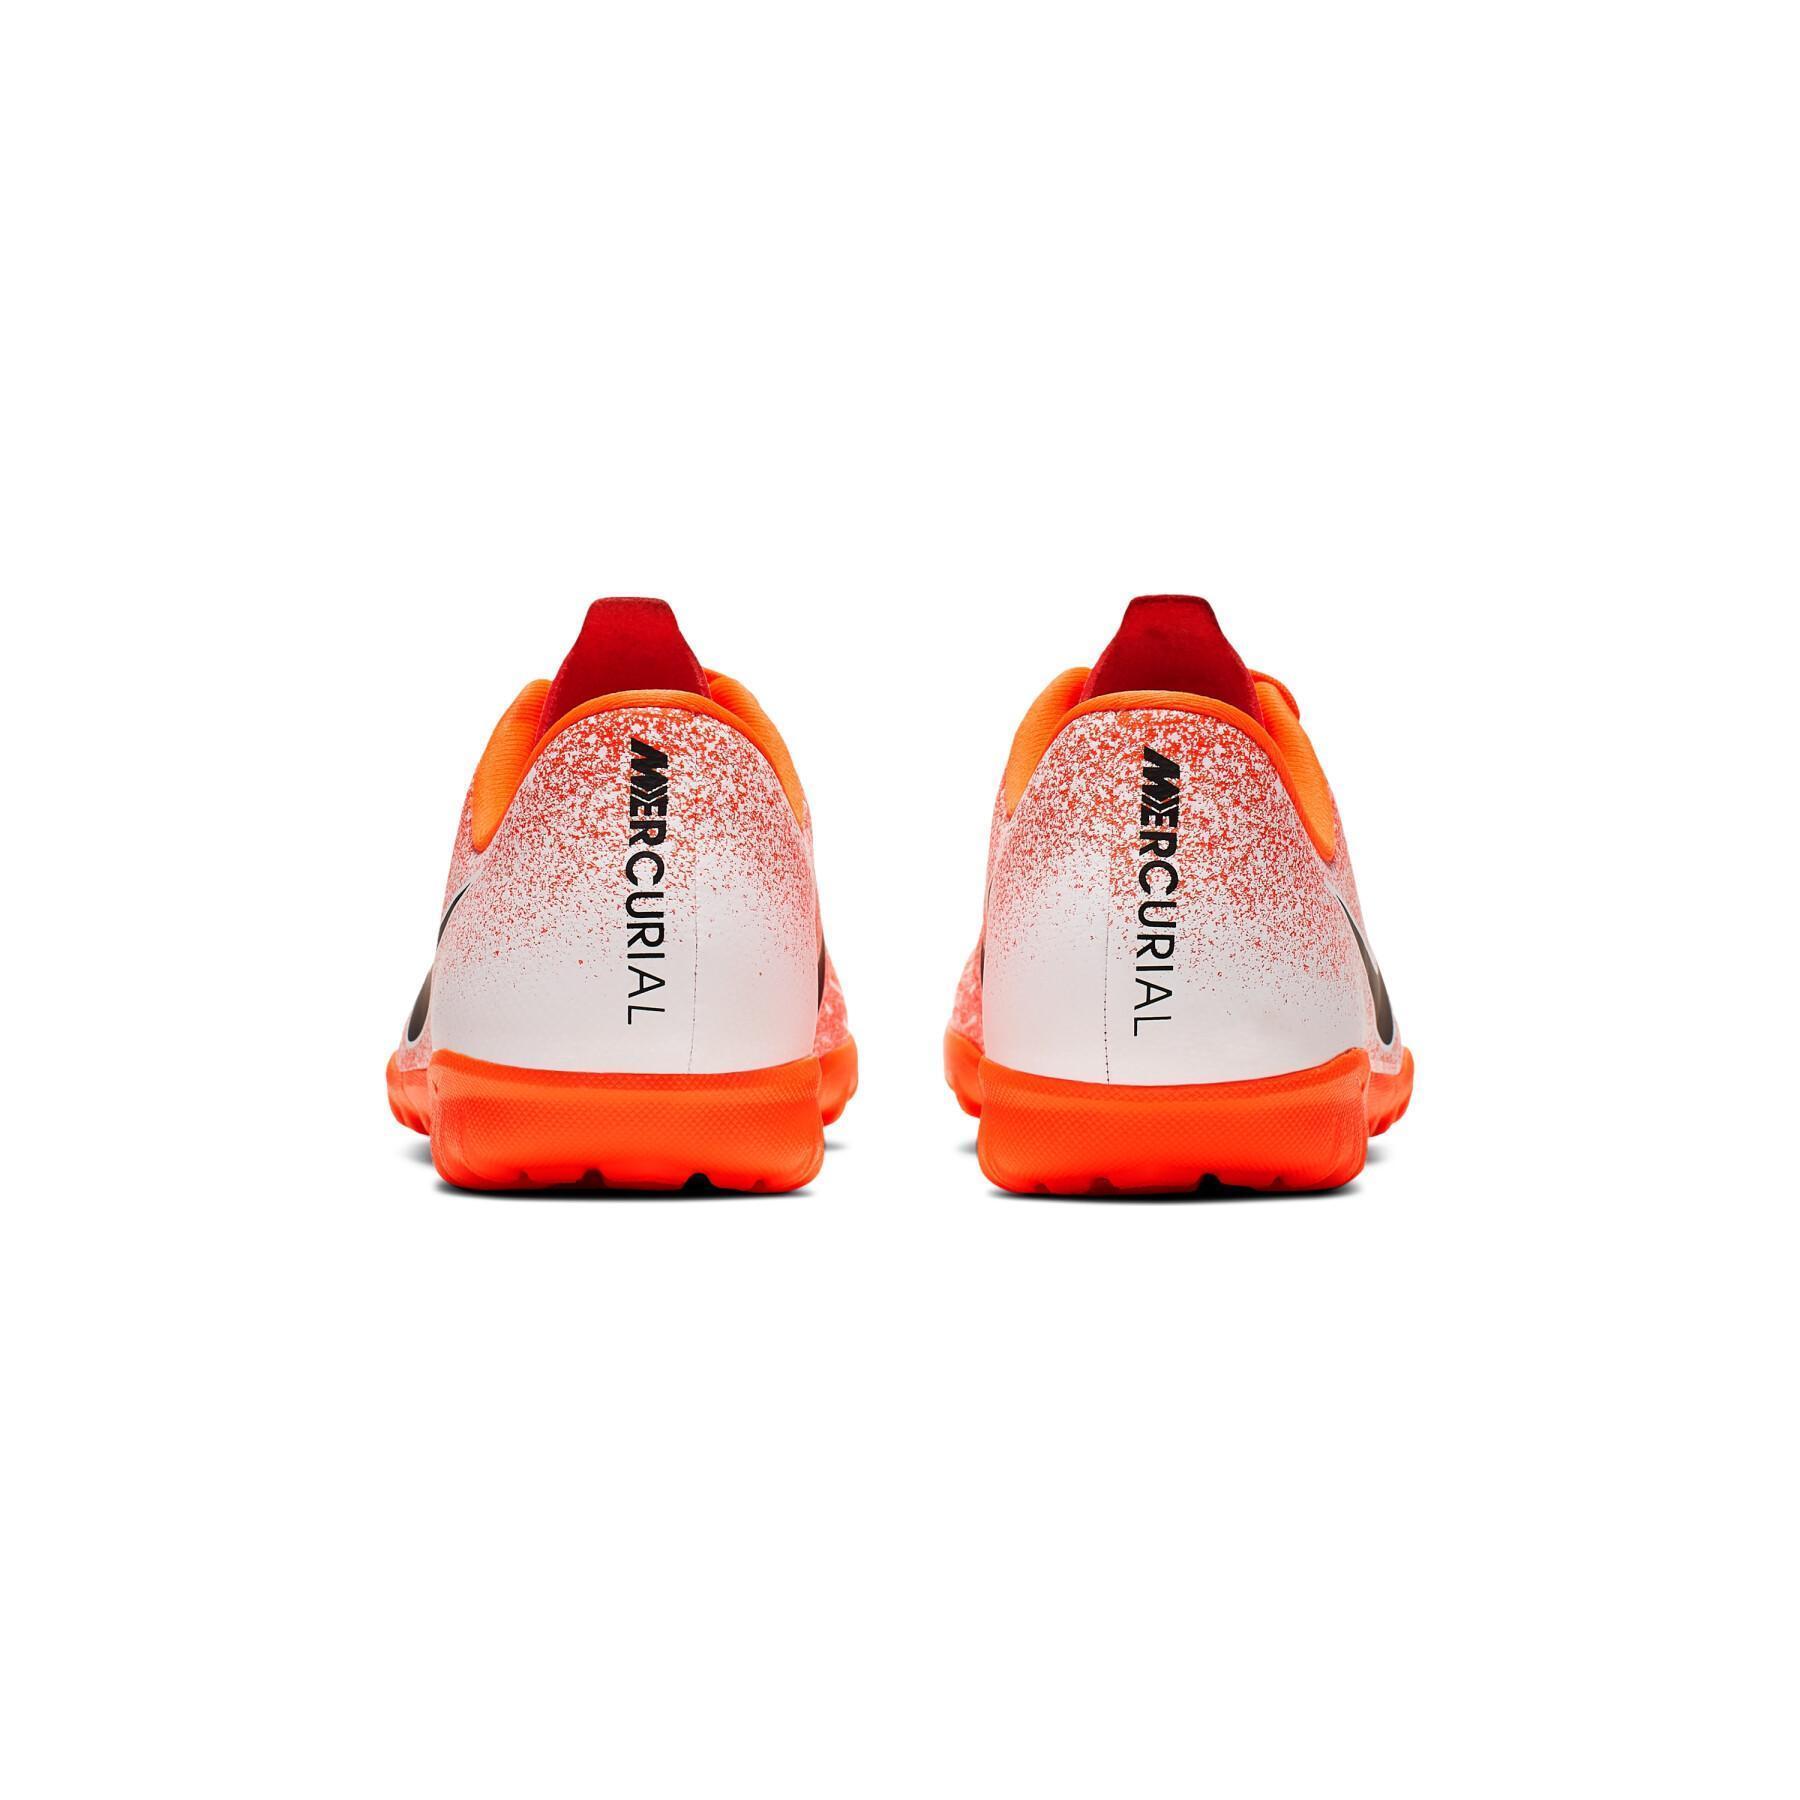 Chaussures de football enfant Nike Mercurial Vapor 12 Academy TF